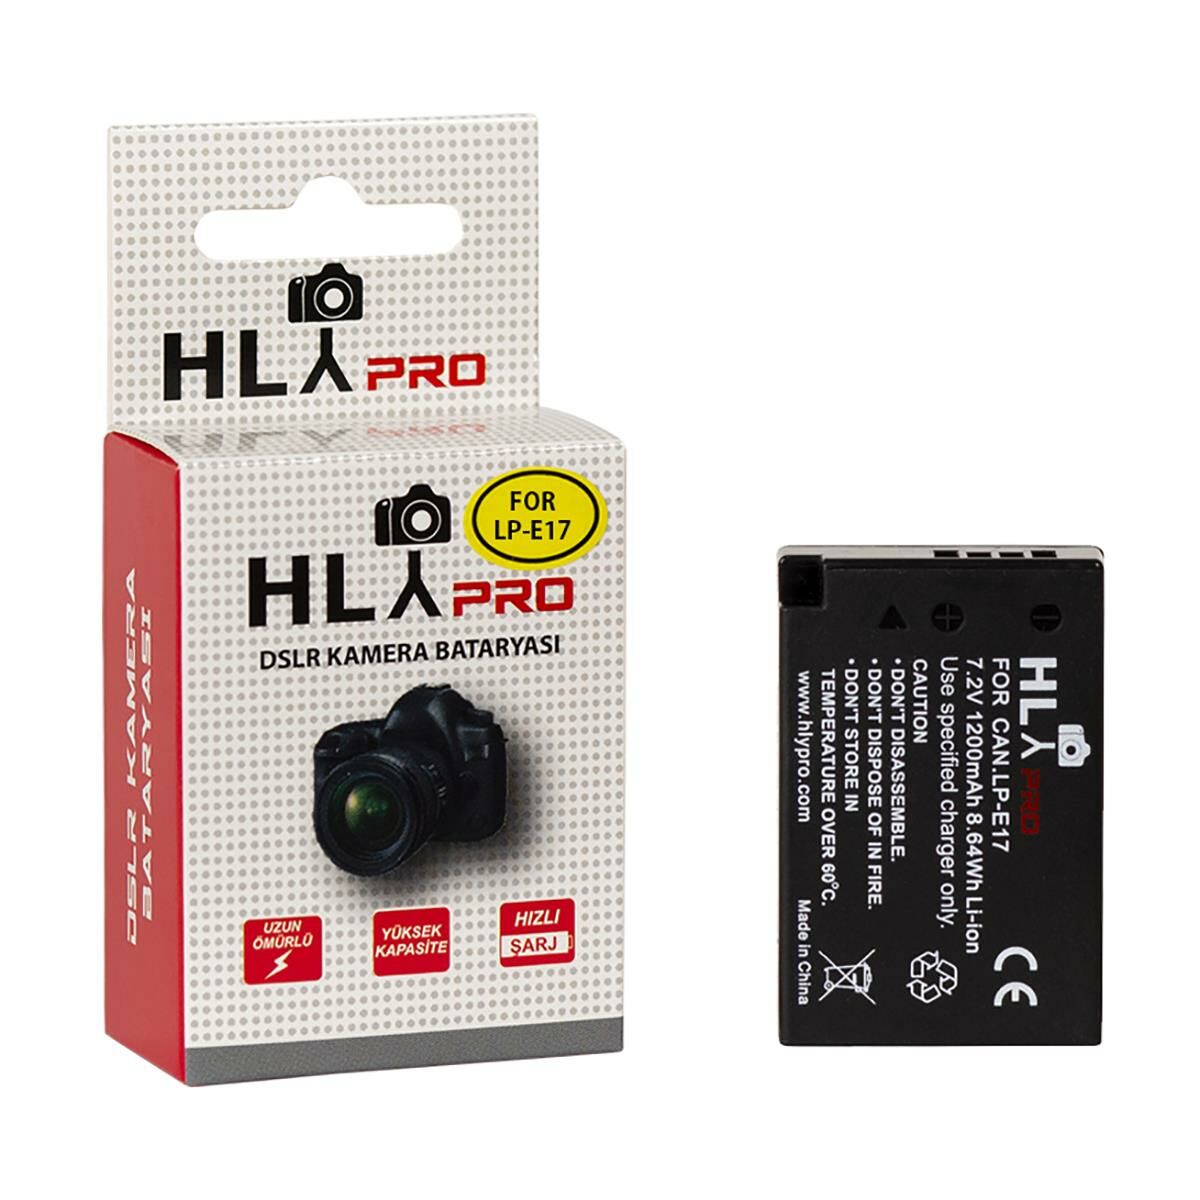 Hlypro Canon 750D için LP-E17 Batarya